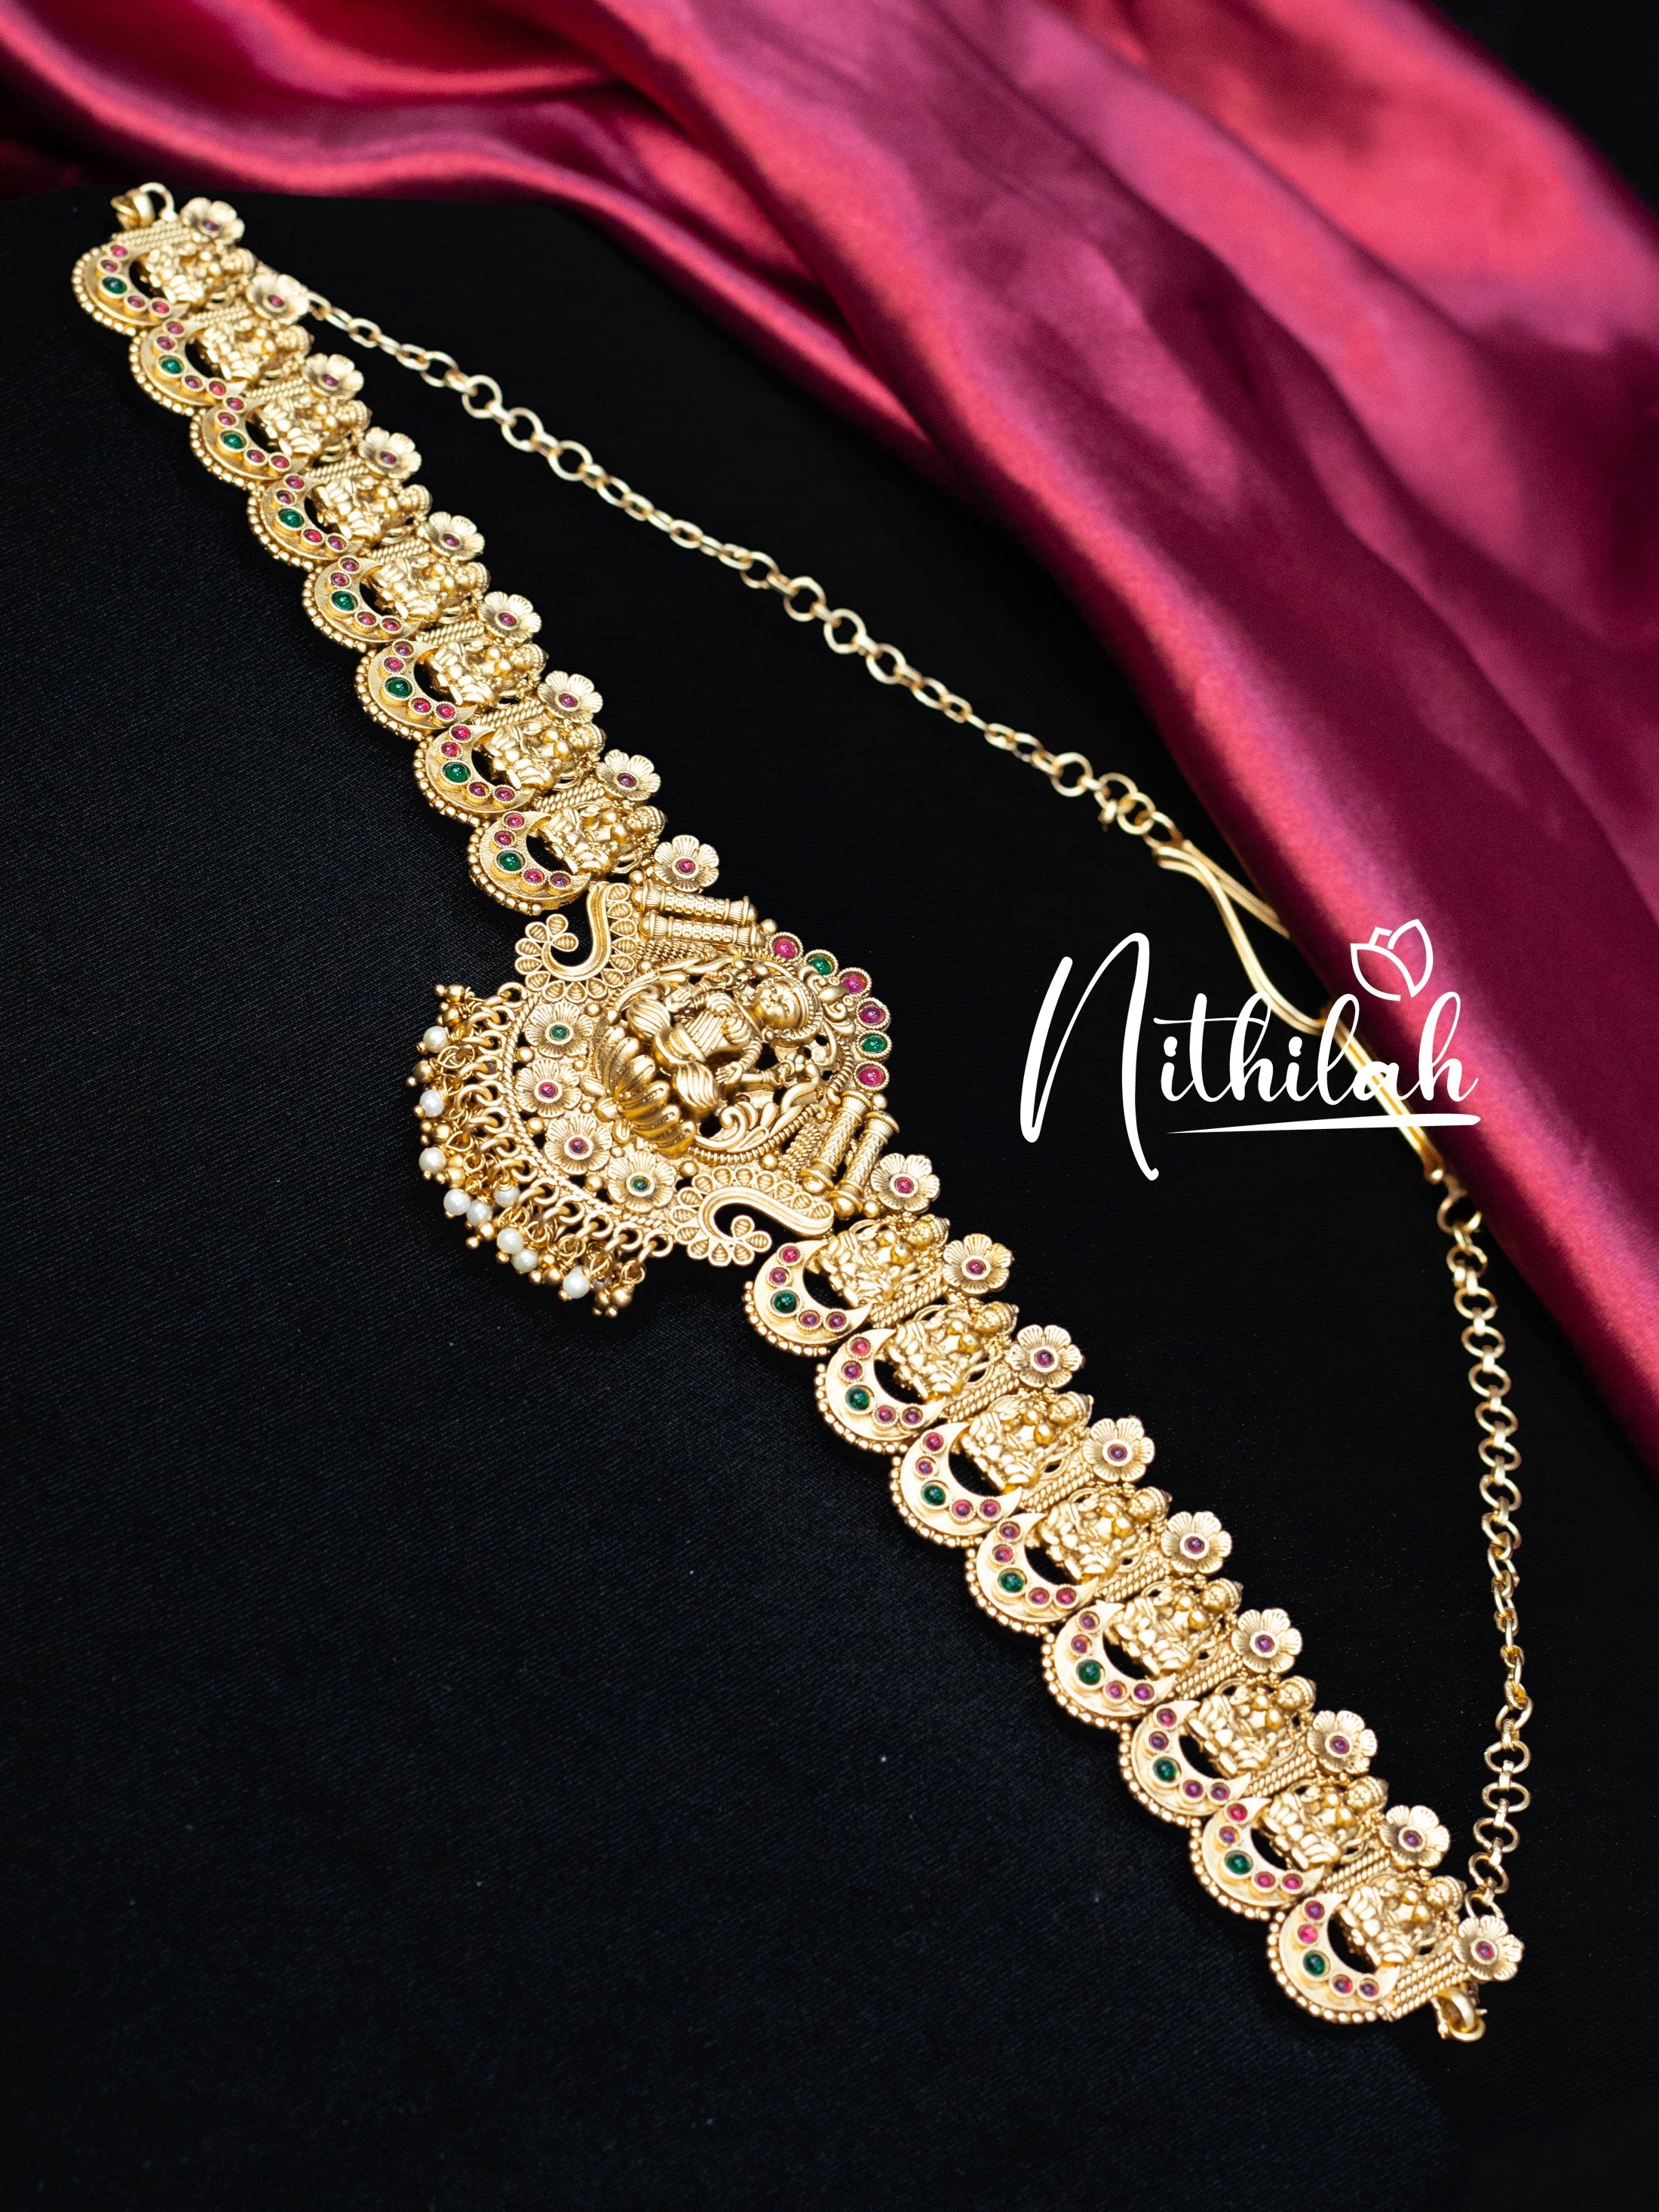 Buy Imitation Jewellery Gold Look Alike Temple Hip Belt NVVO108 Online